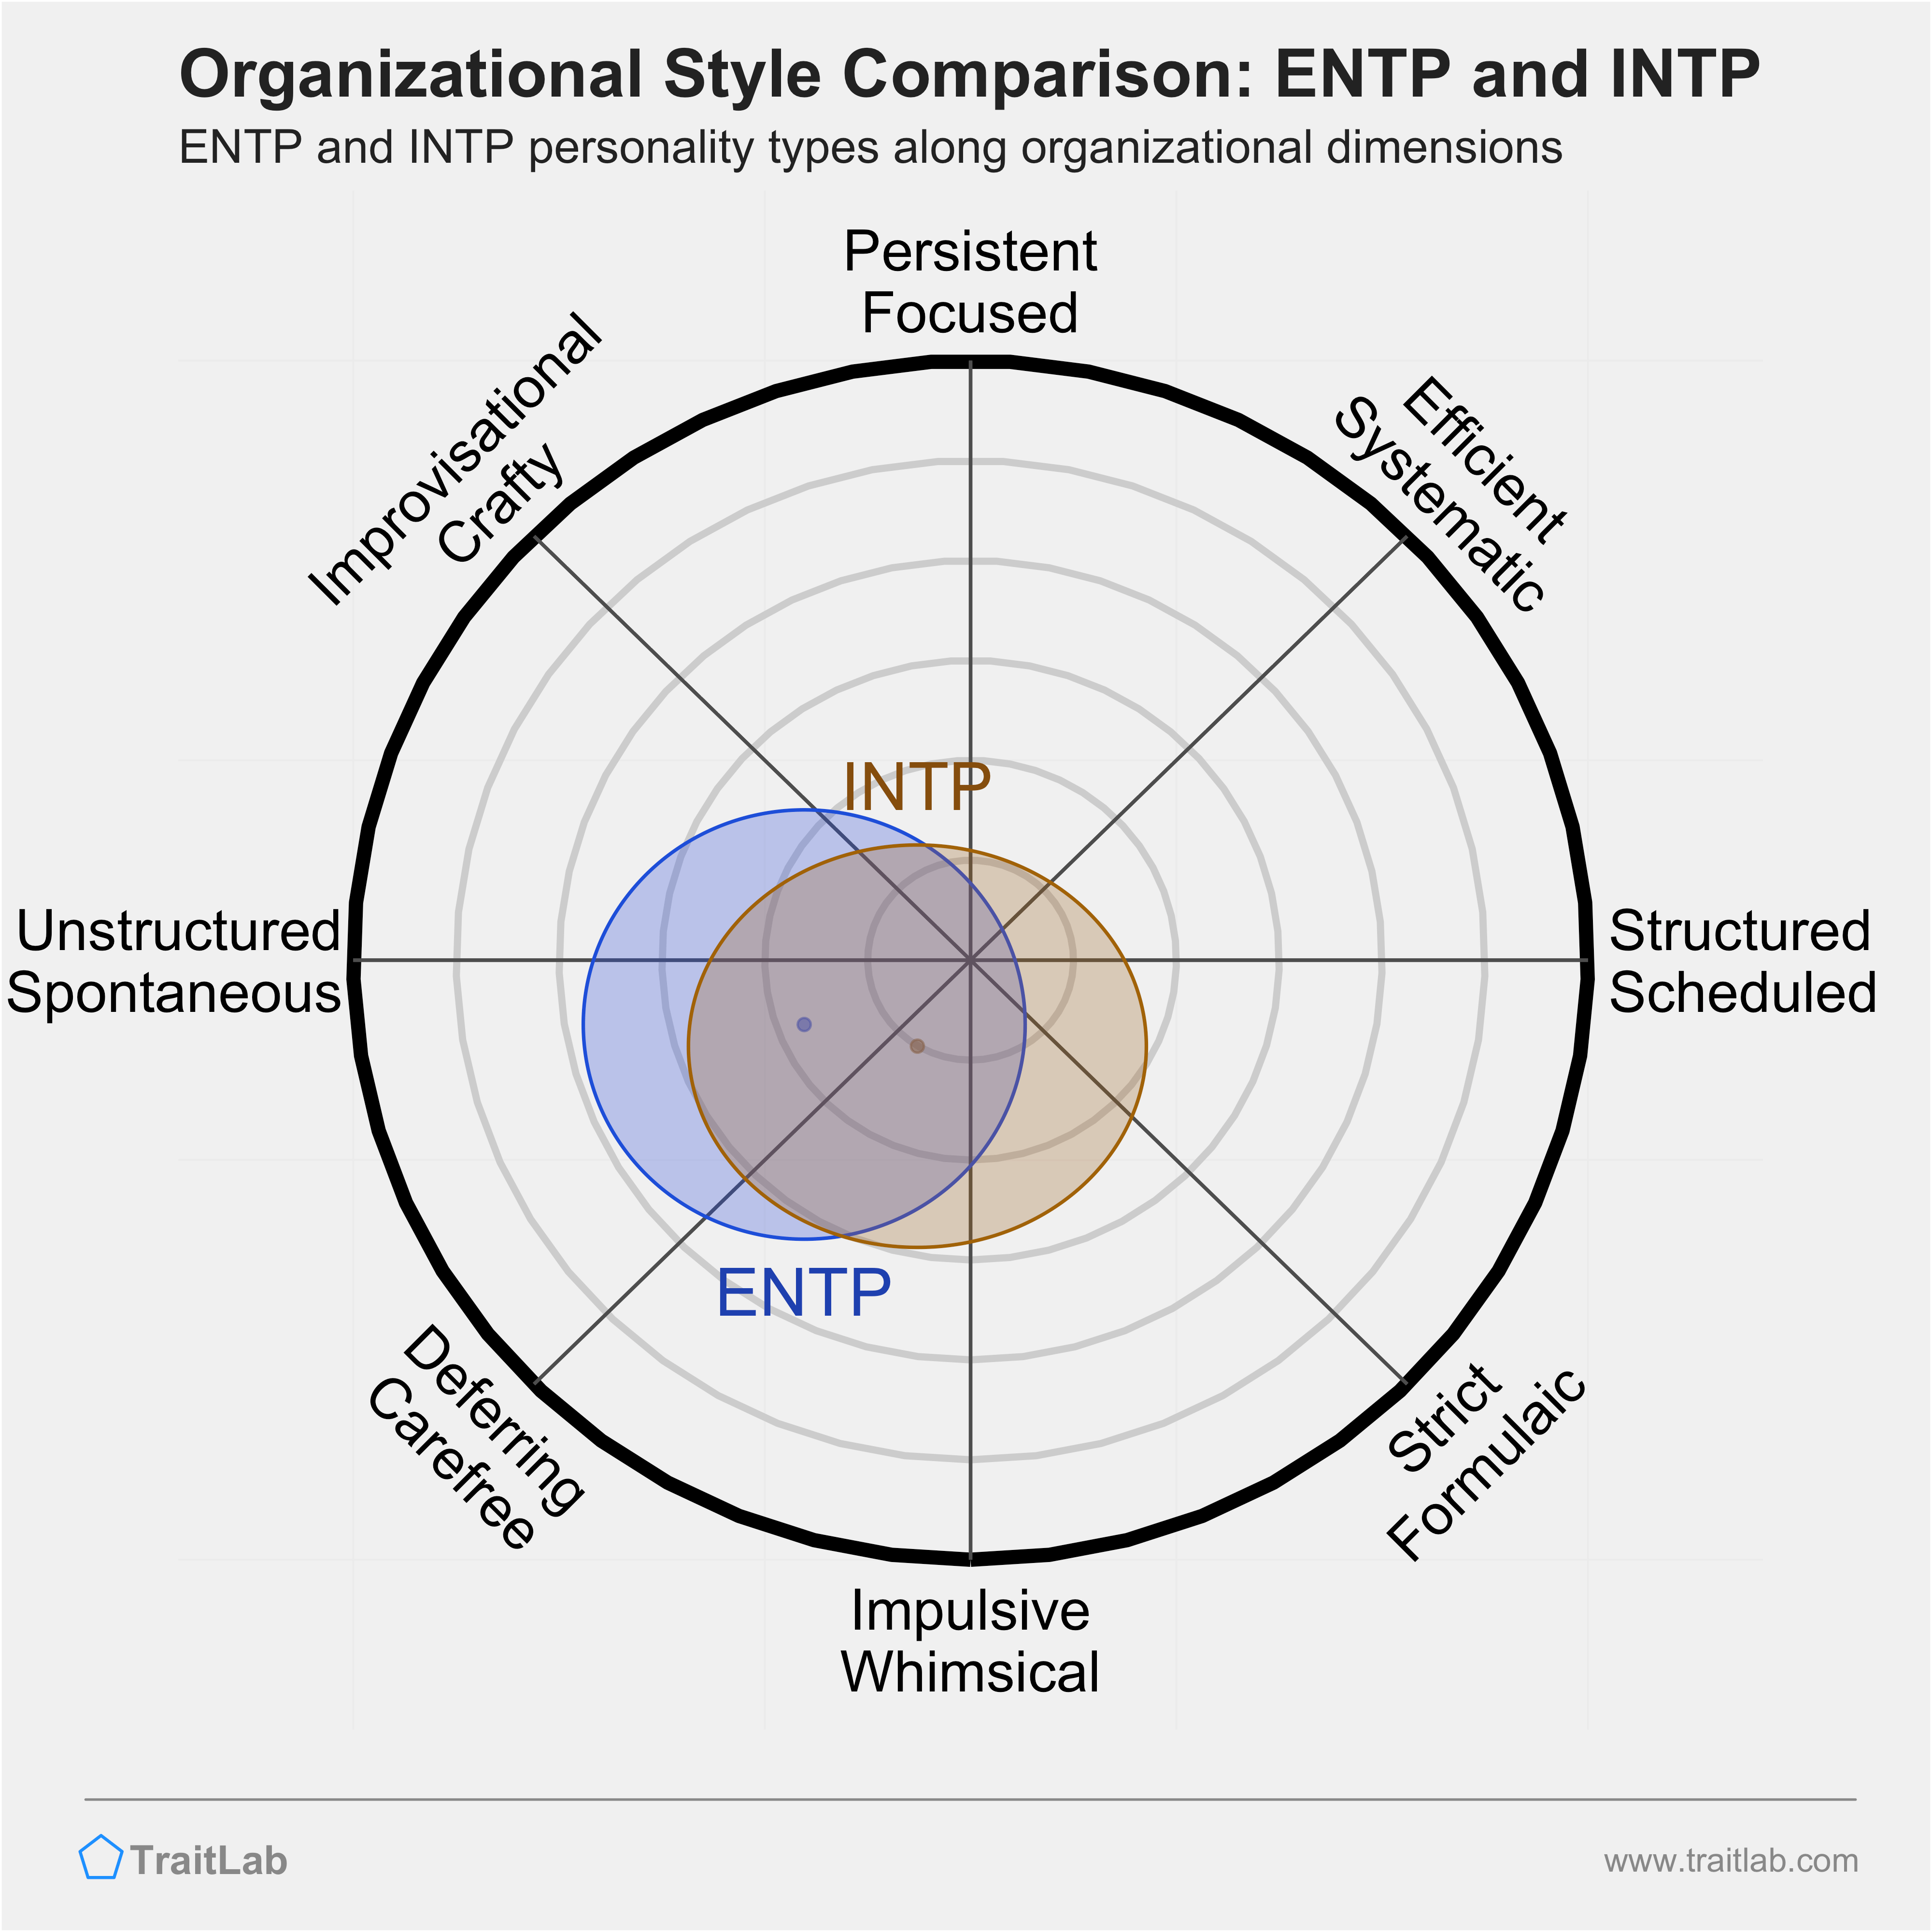 ENTP and INTP comparison across organizational dimensions